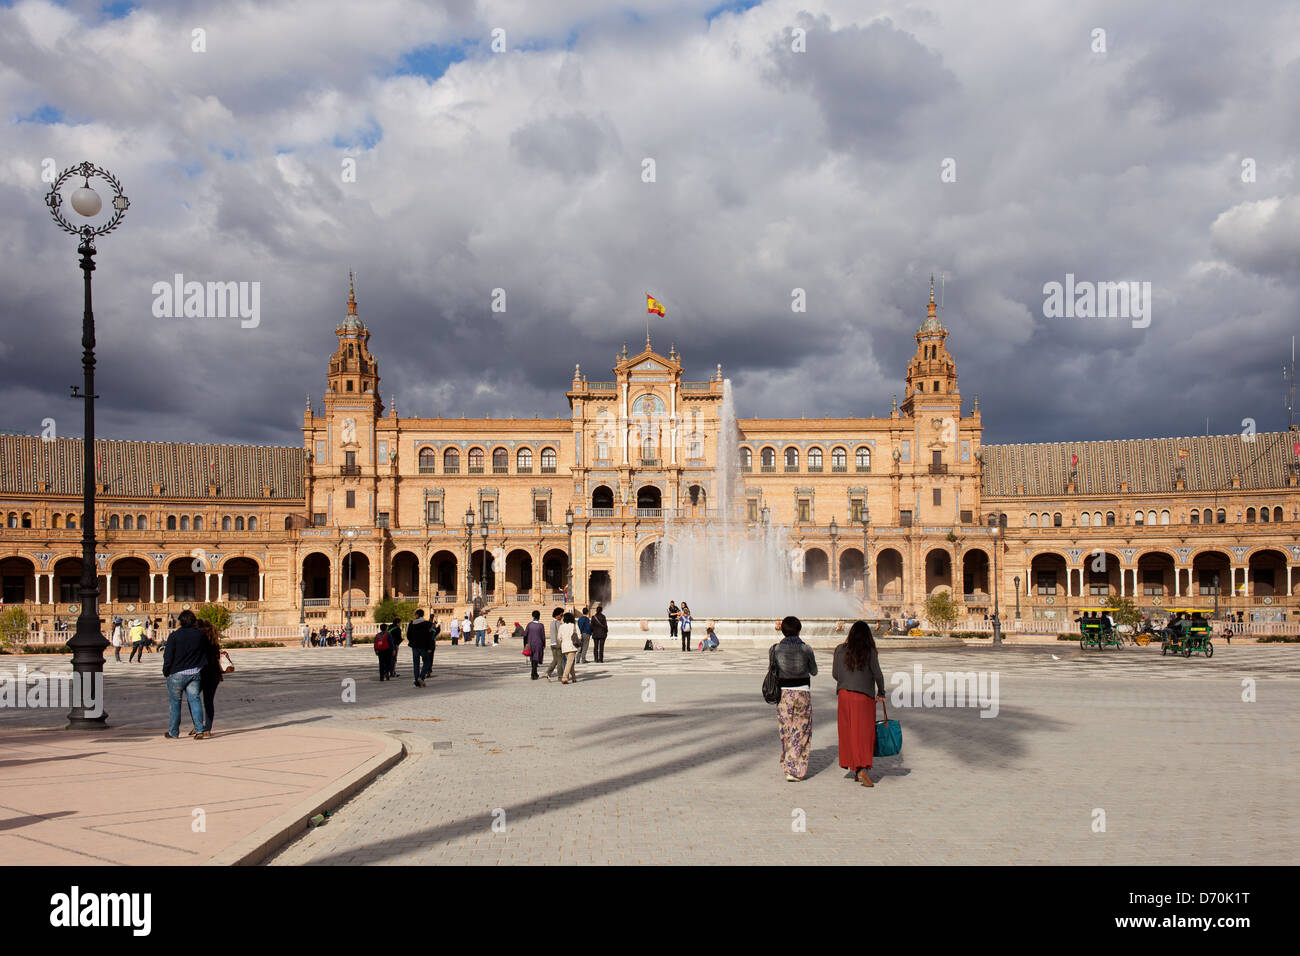 Plaza de España (spanische Quadrat) Neorenaissance Stil Pavillon und Brunnen in Sevilla, Andalusien, Spanien. Stockfoto